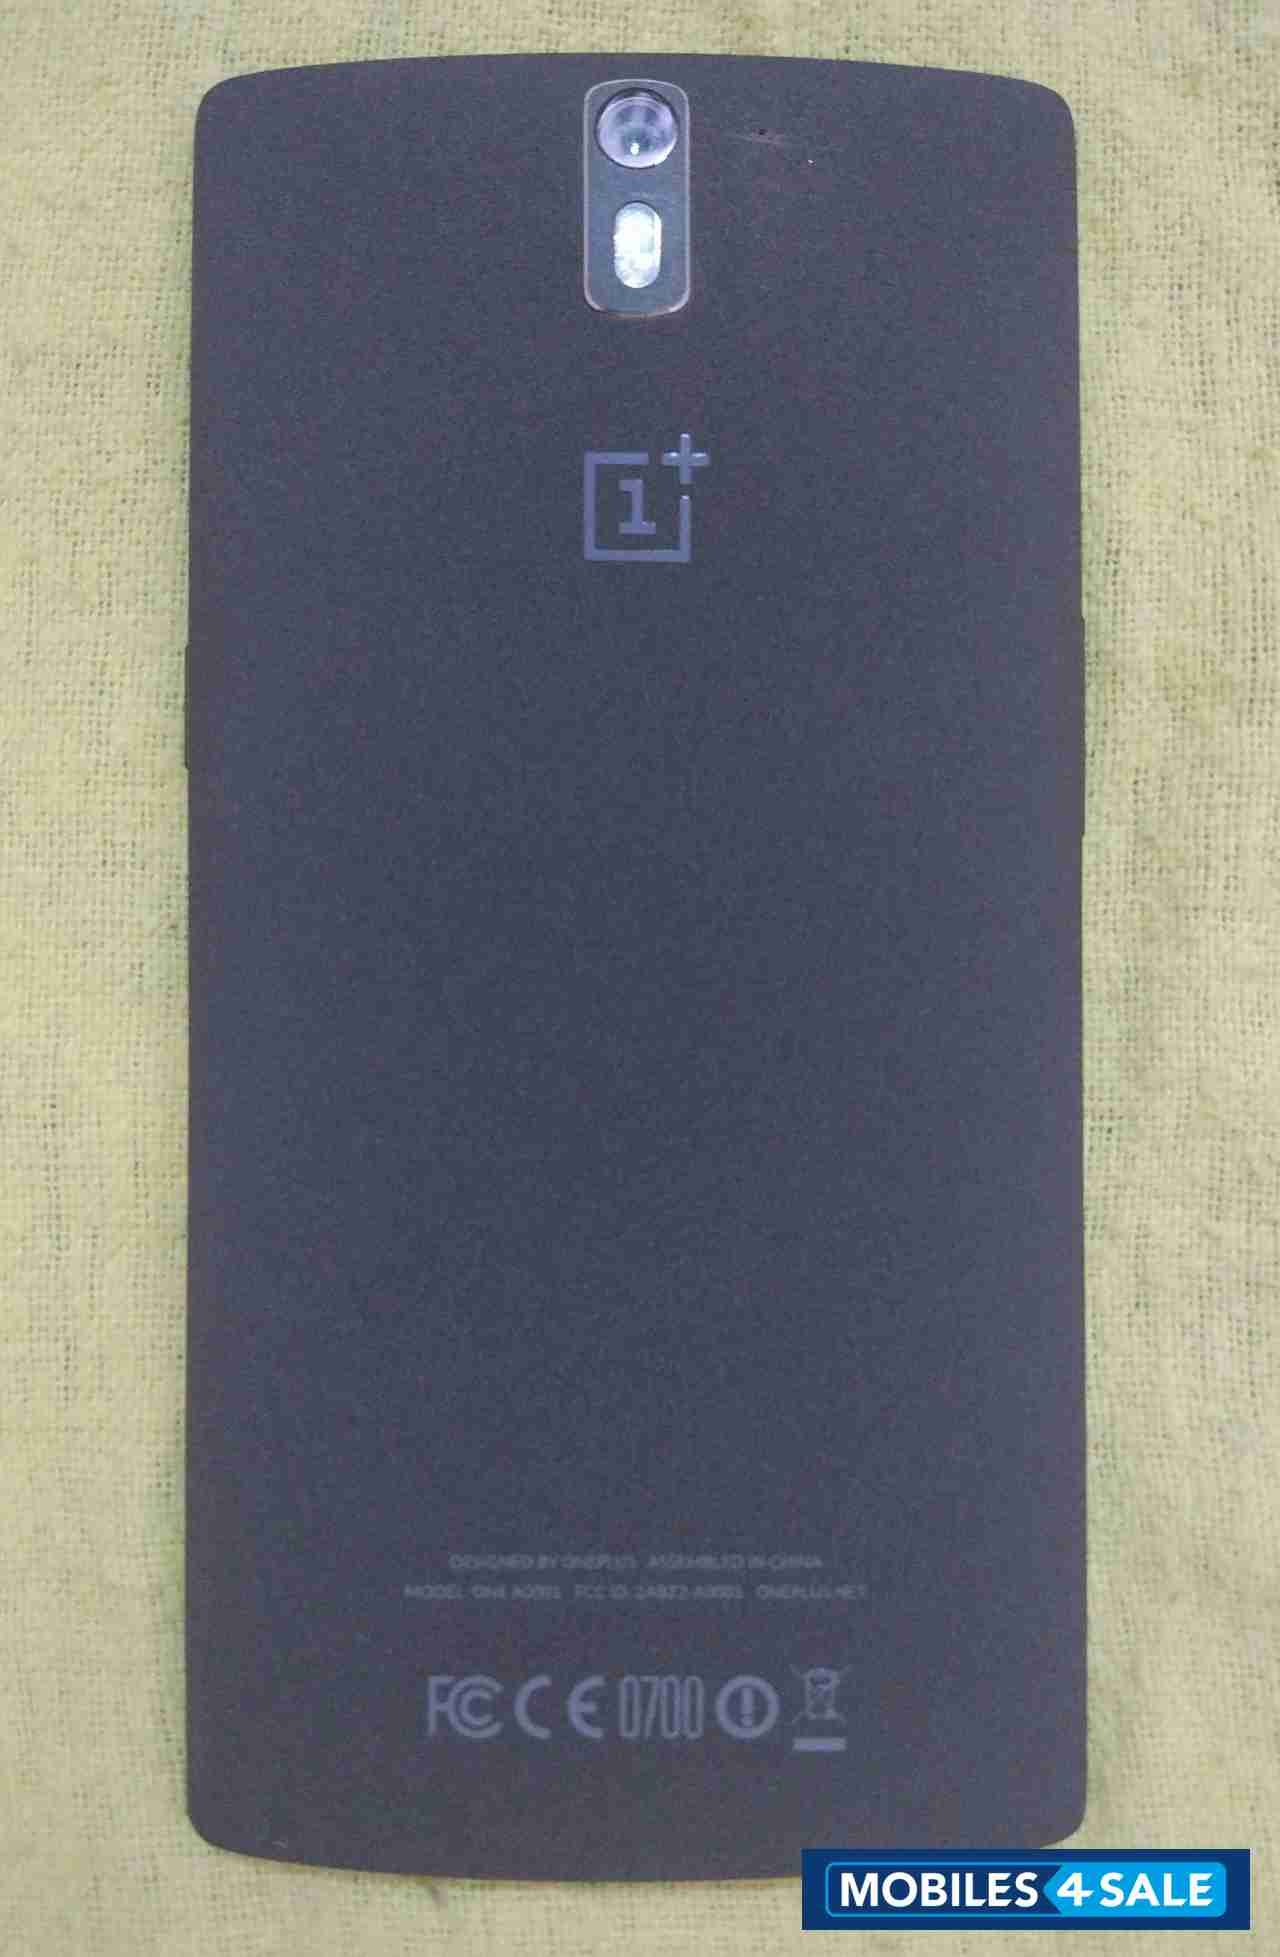 Sandstone Black OnePlus One